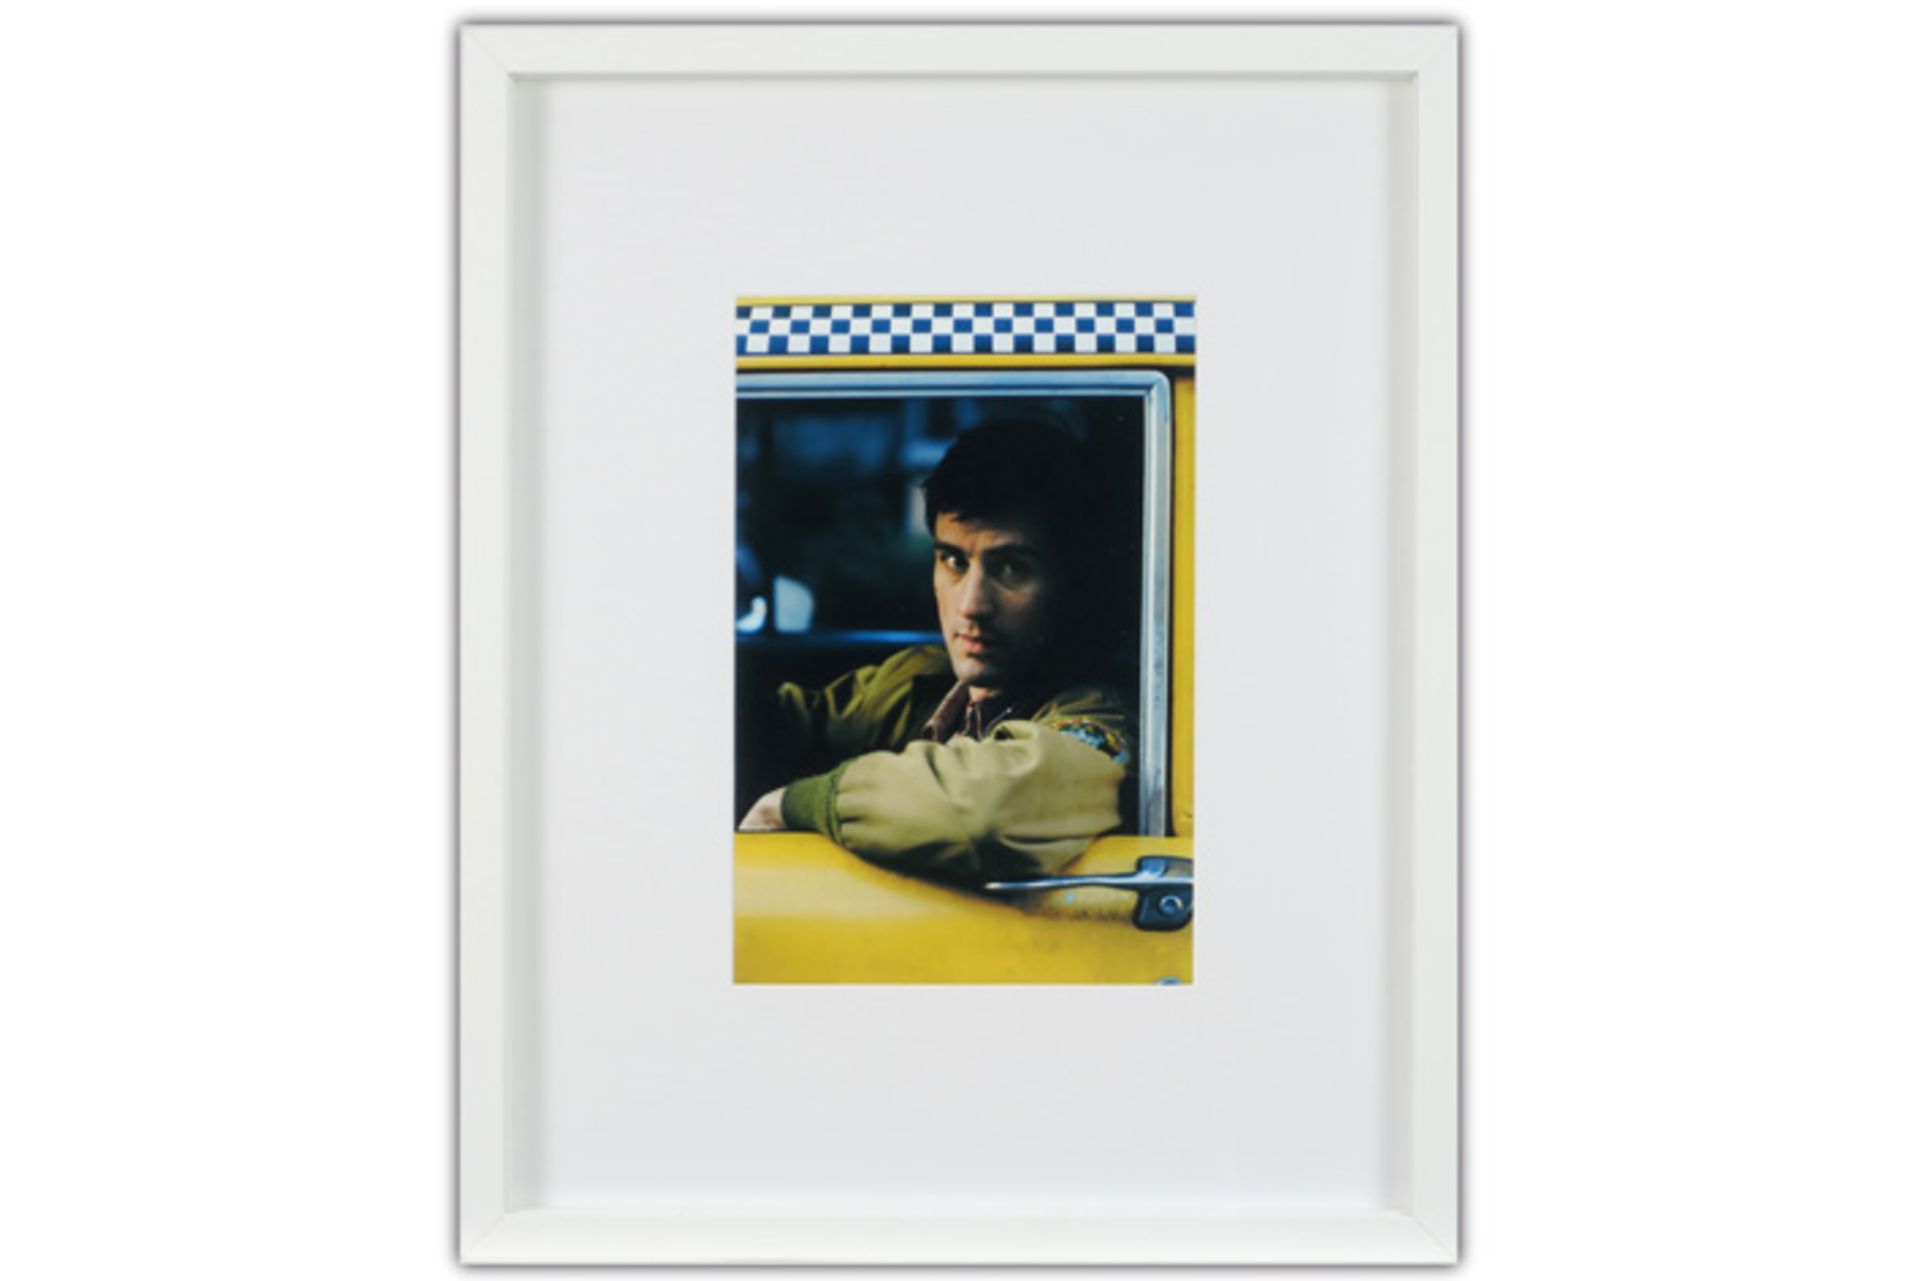 "Taschen" luxury edition of the book "Taxi Driver" with a framed photograph of Robert de Niro by Sha - Bild 2 aus 7